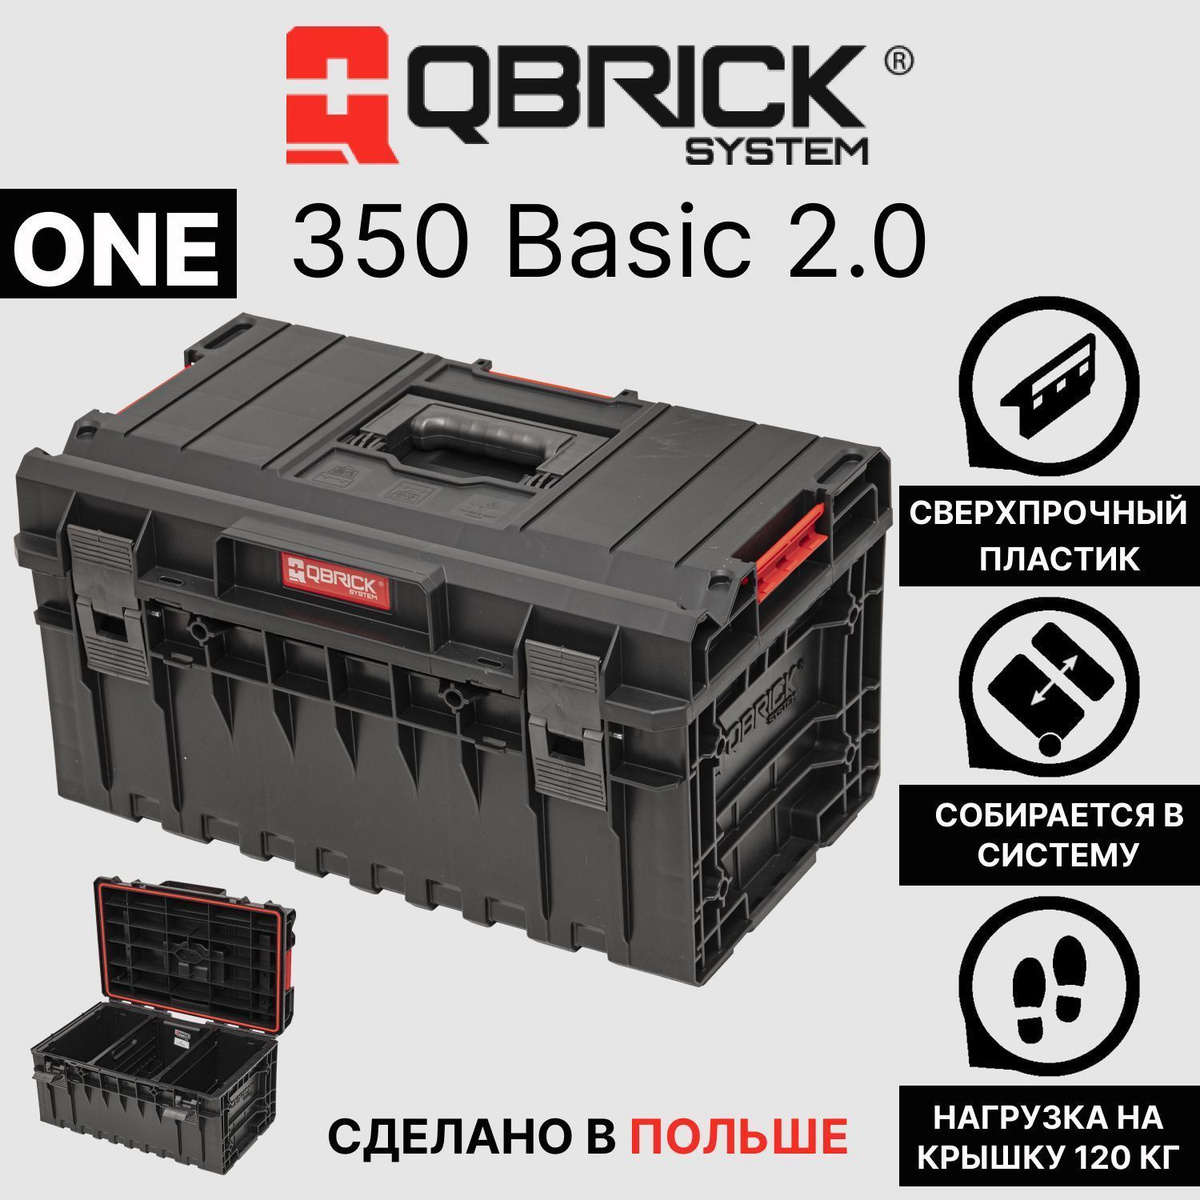 Qbrick System ONE 350 Basic 2.0